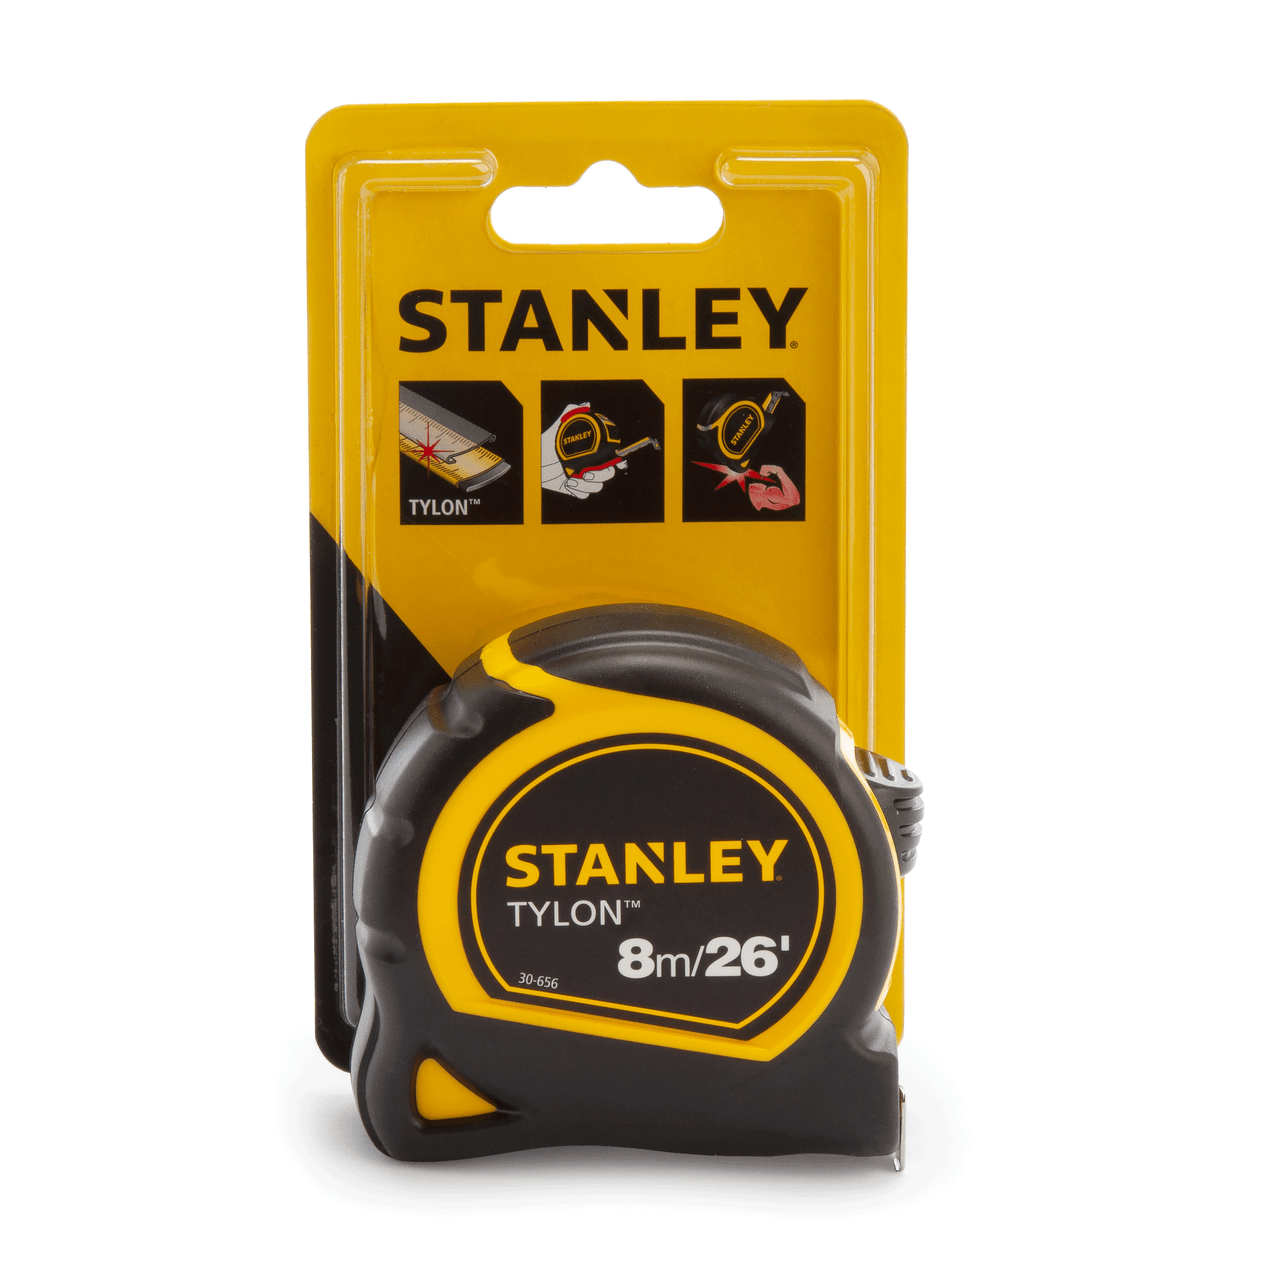 Stanley 0-30-656 Metric/Imperial Tylon Pocket Tape Measure 8m